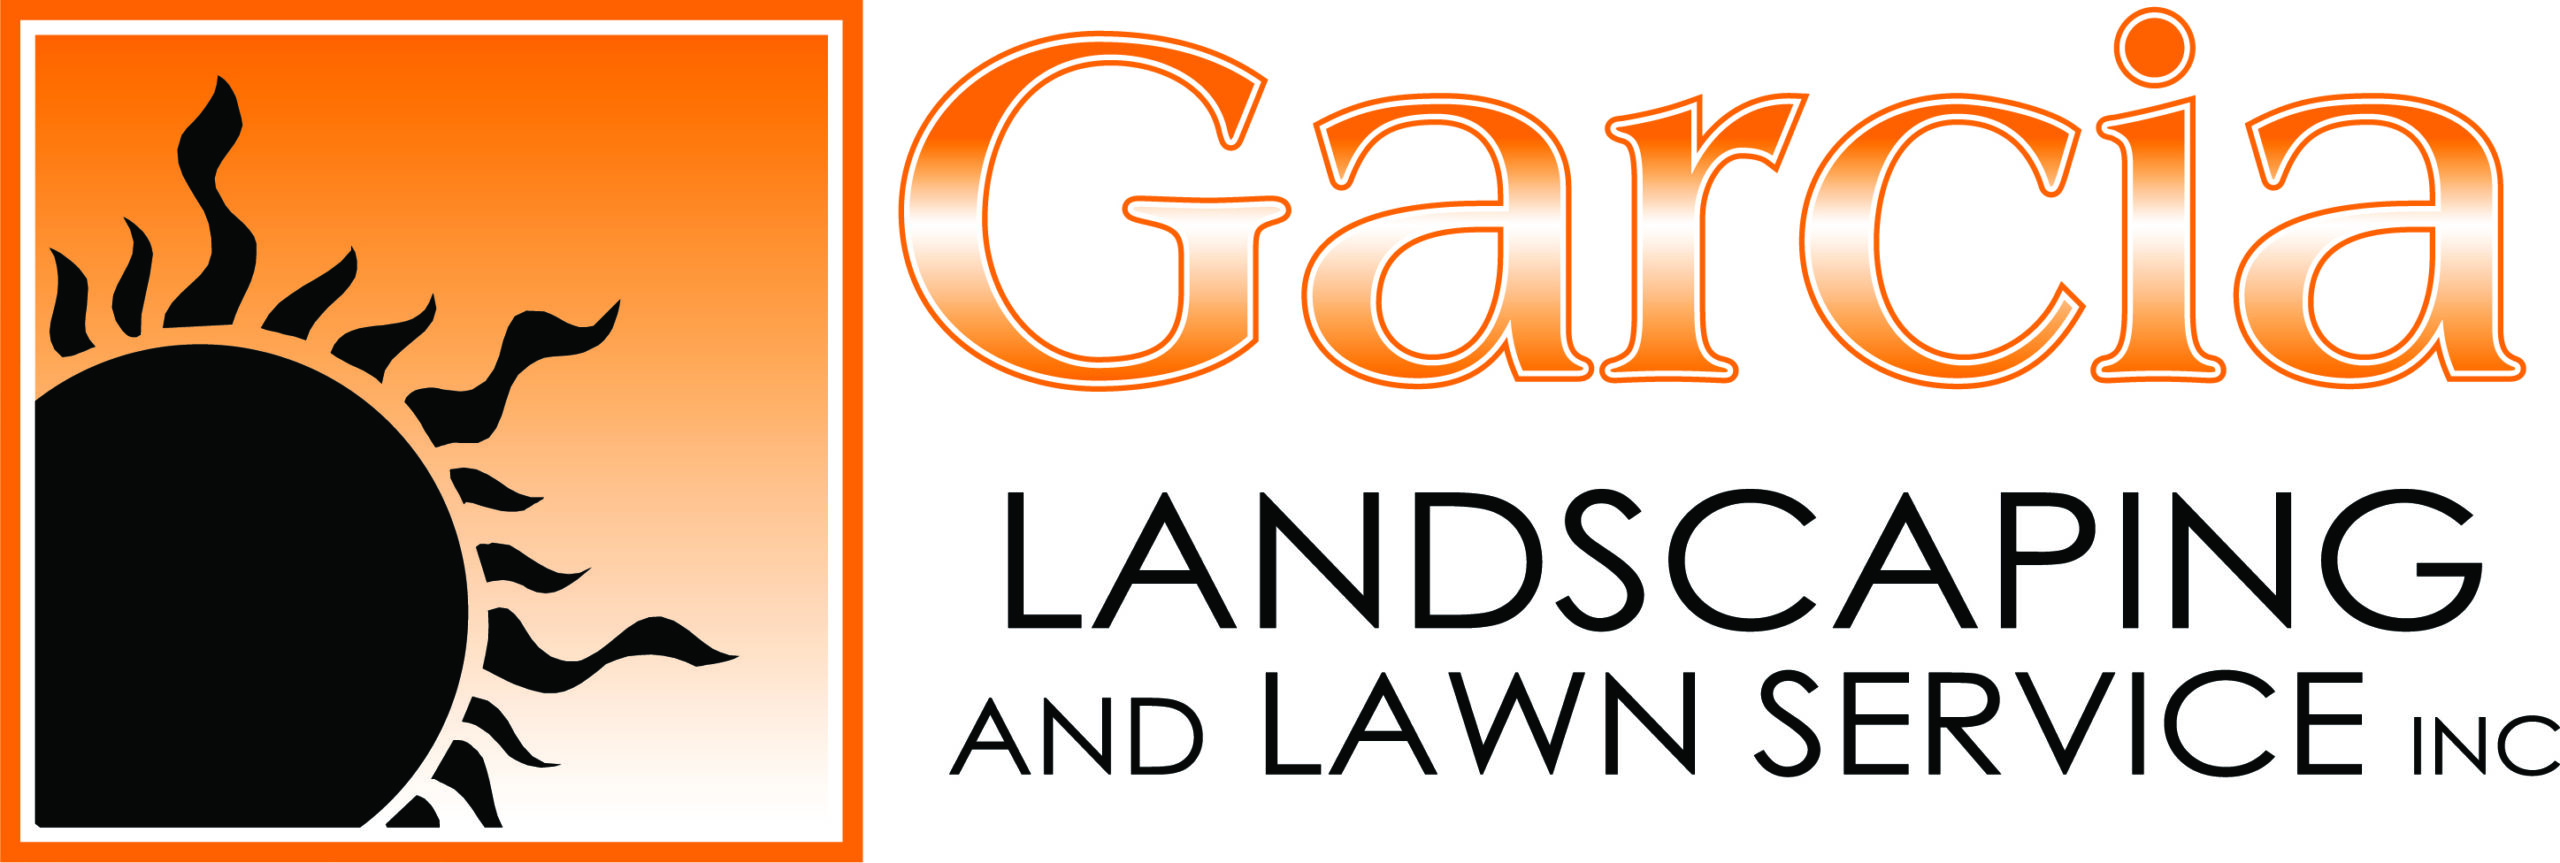 Garcia Landscaping & Lawn Service Inc.